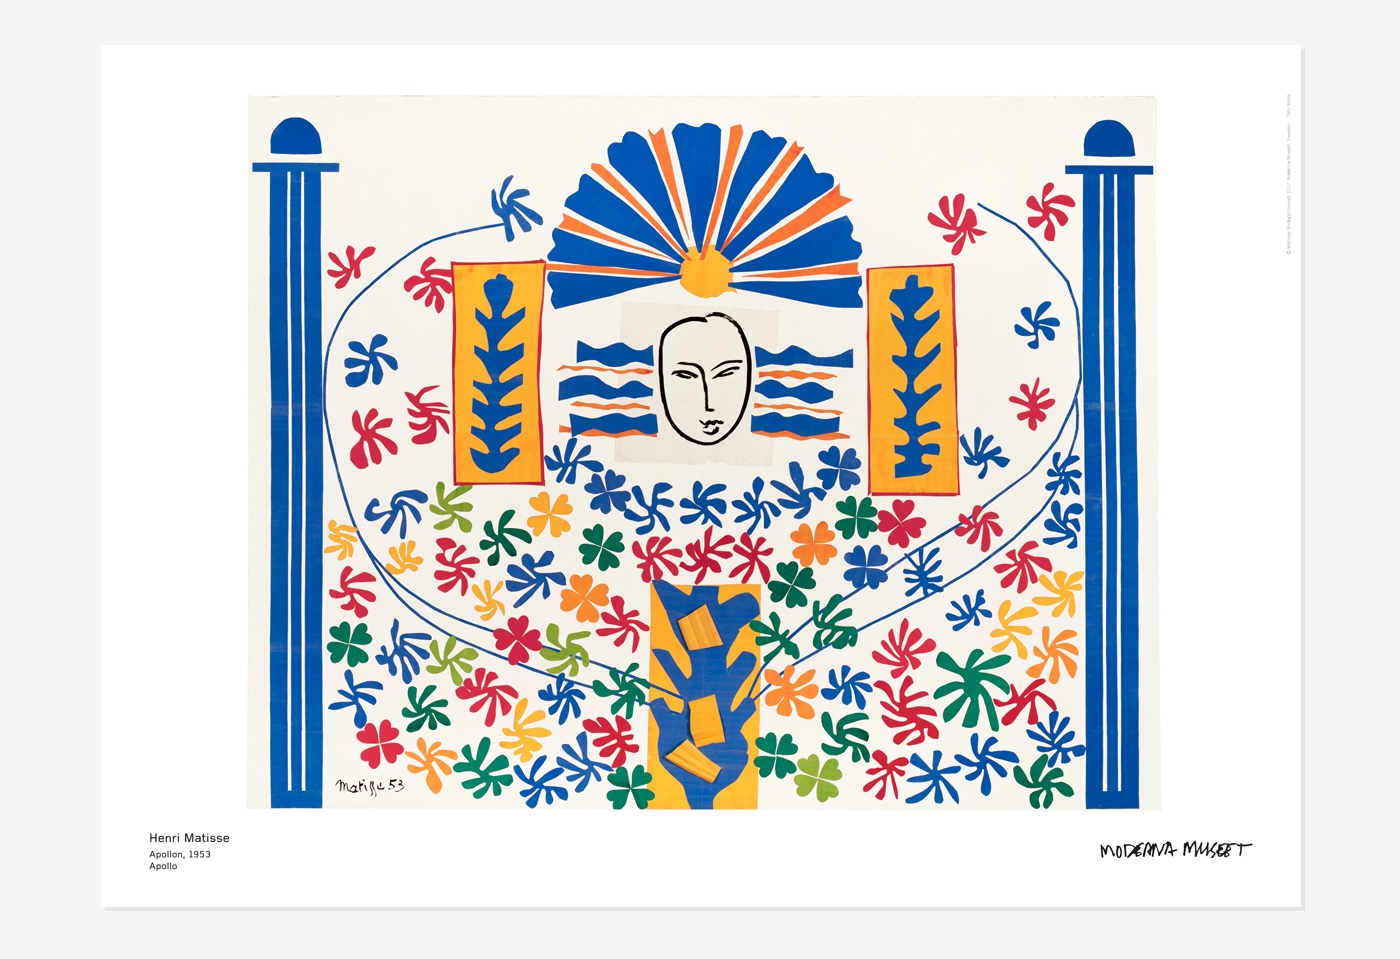 Poster, Henri Matisse, Apollon, 50 x 70 cm